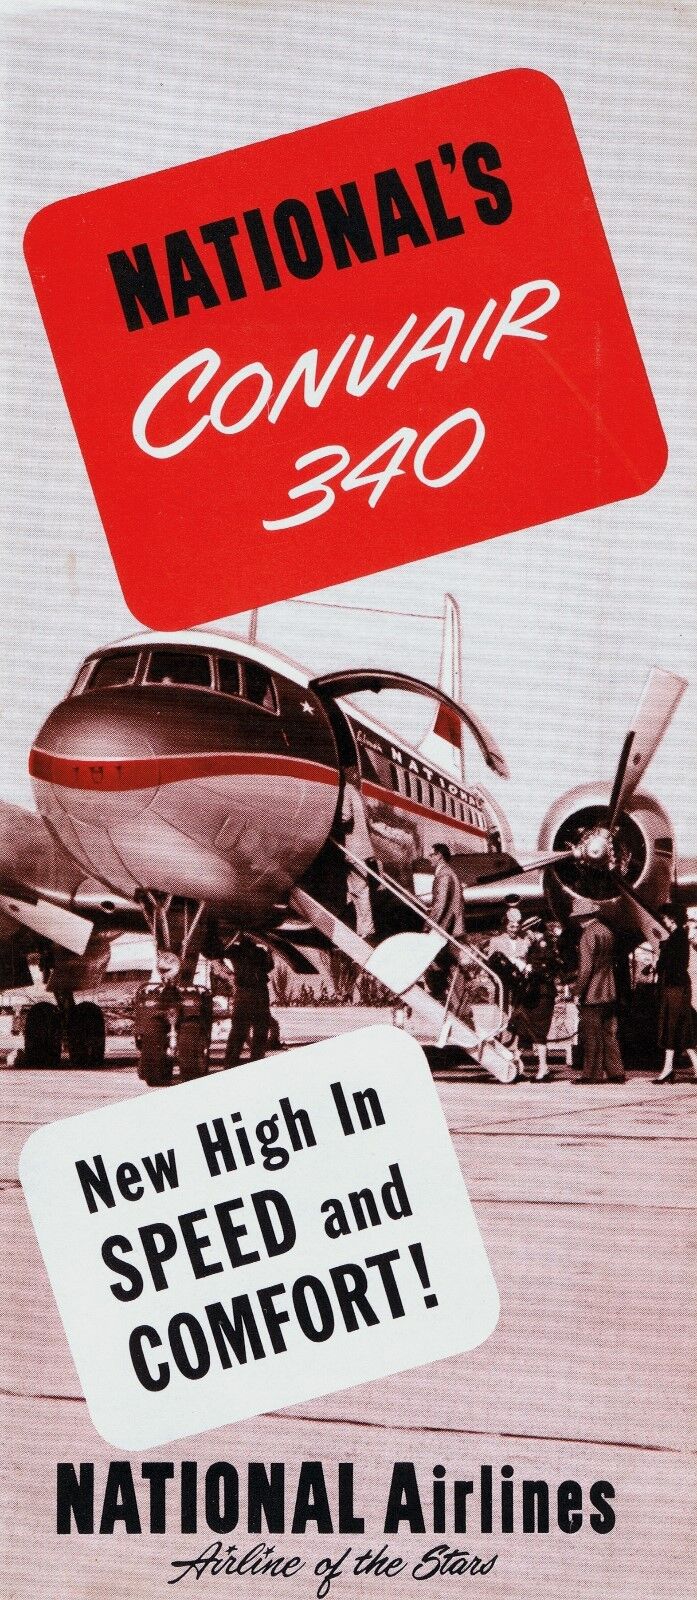 National Airlines Convair 340 Brochure =